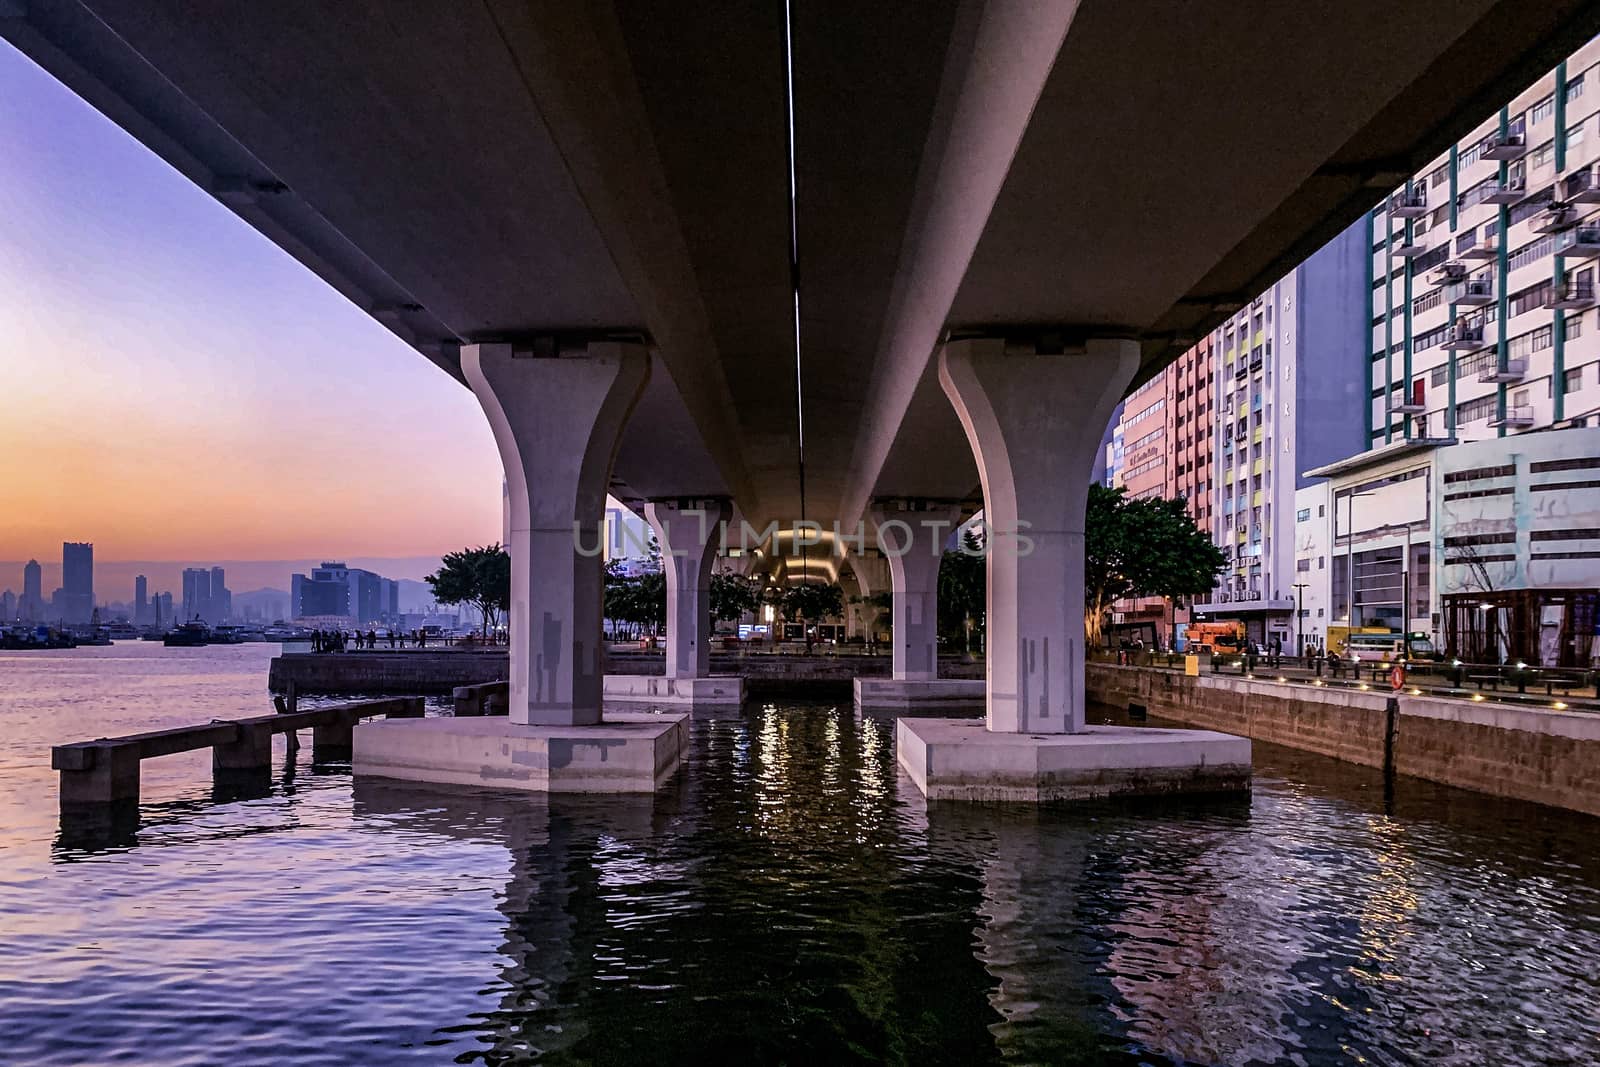 Outdoor park underneath car bridge near the Hong Kong river in d by cougarsan